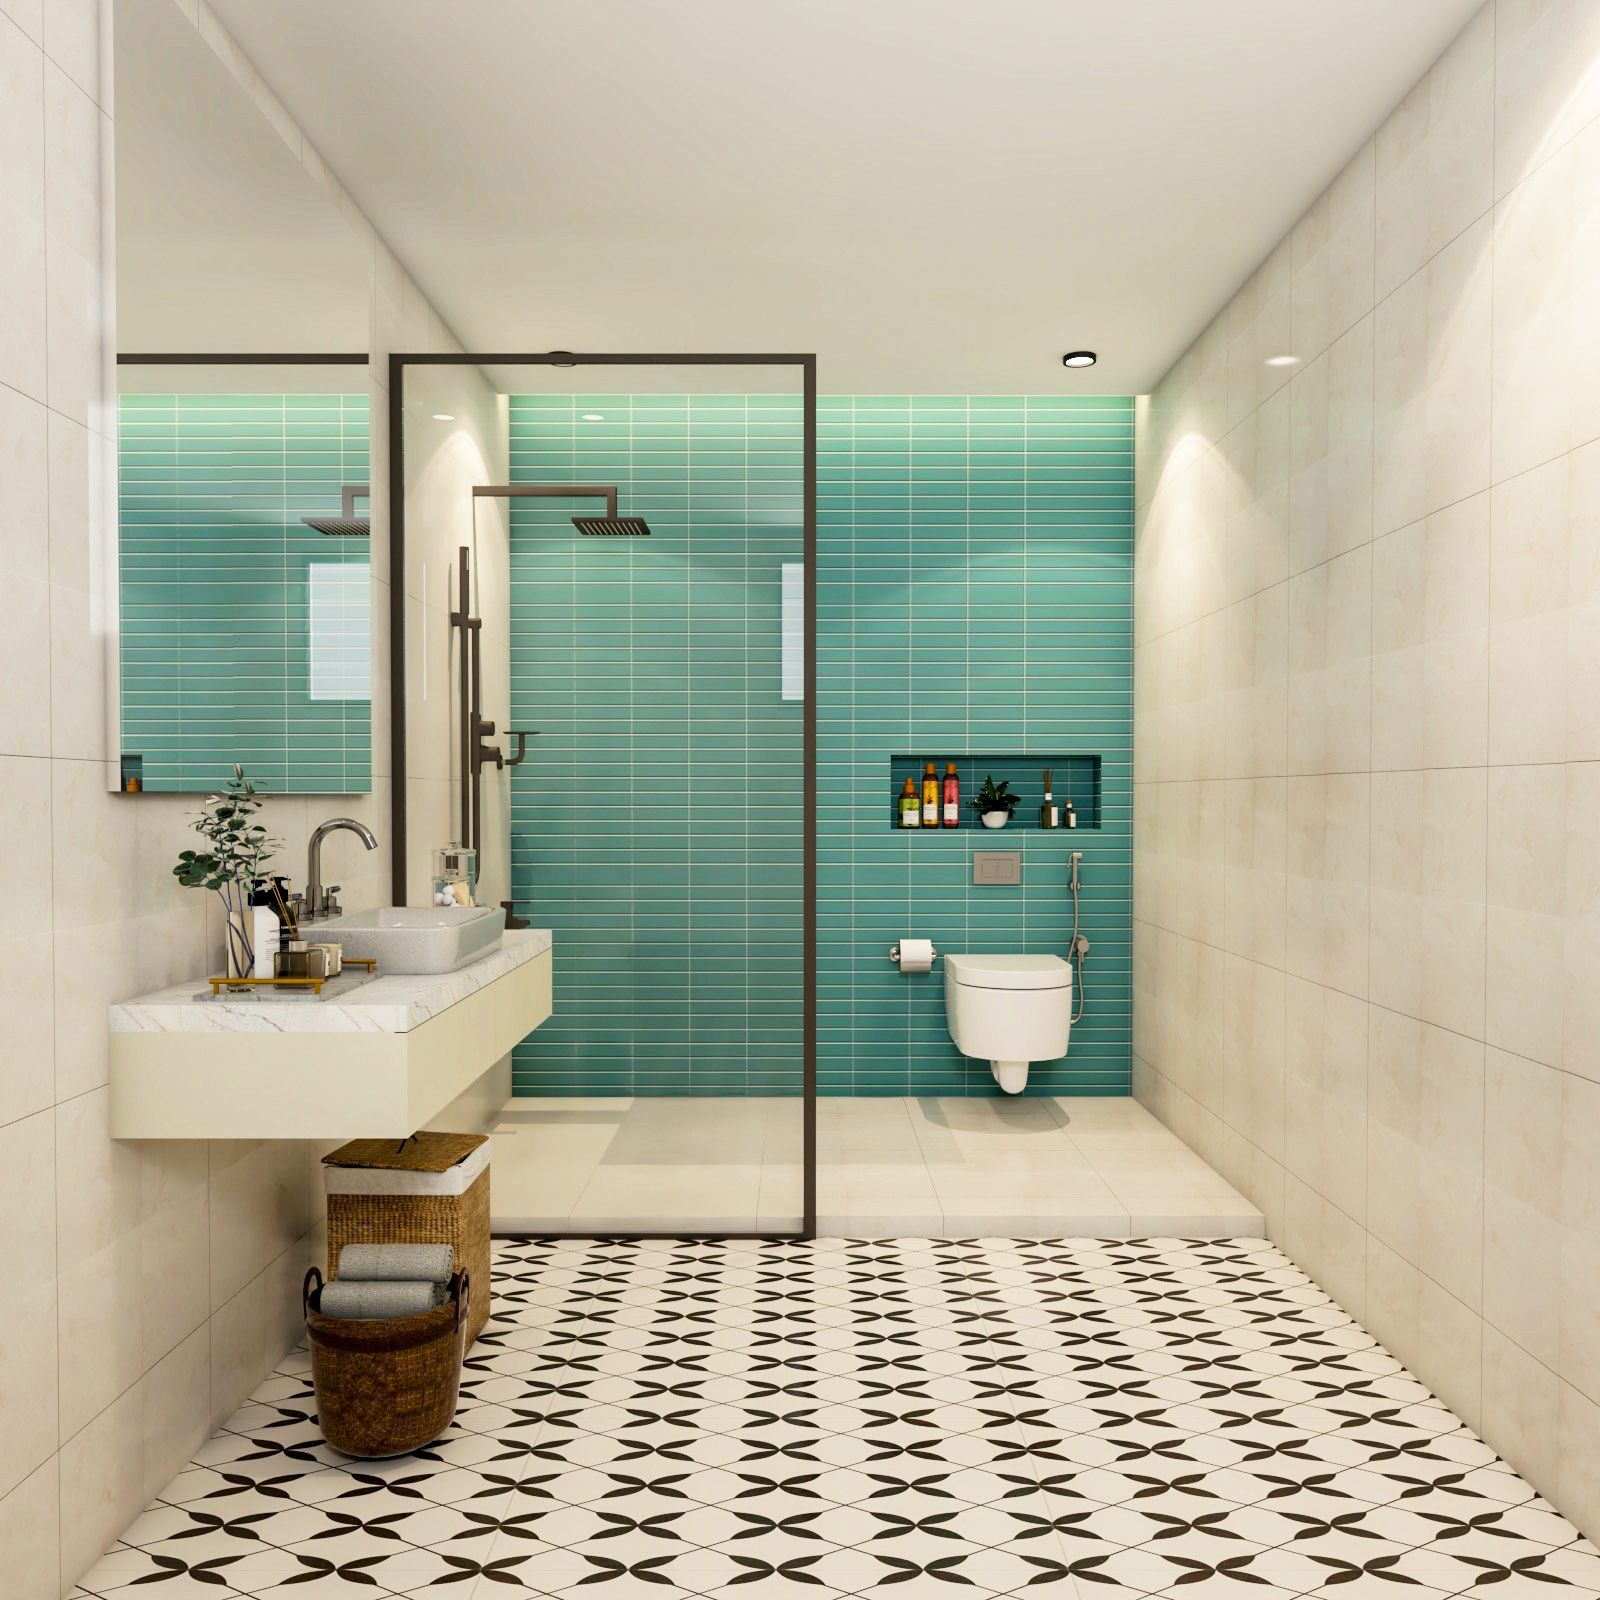 Bathroom Interior Design With Blue Subway Wall Tiles | Livspace